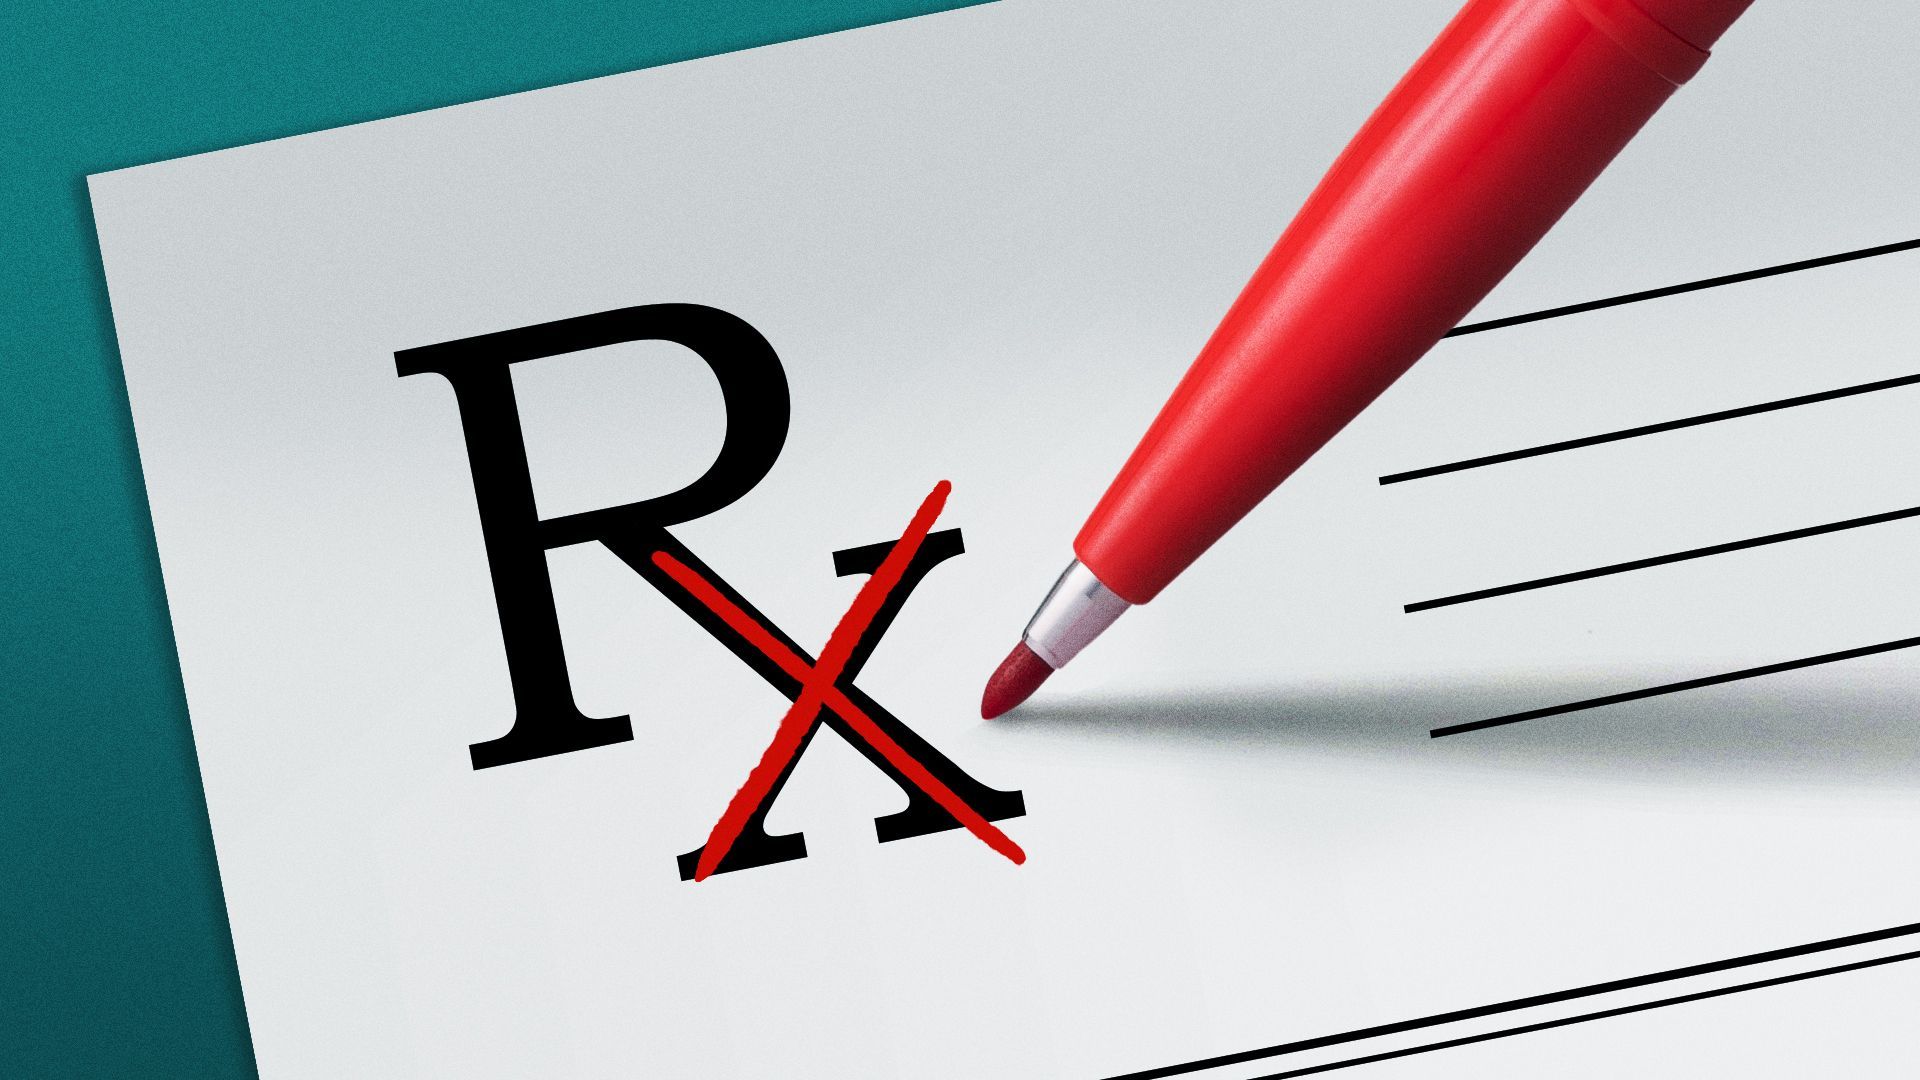 How Rx symbol came to mean prescription drugs